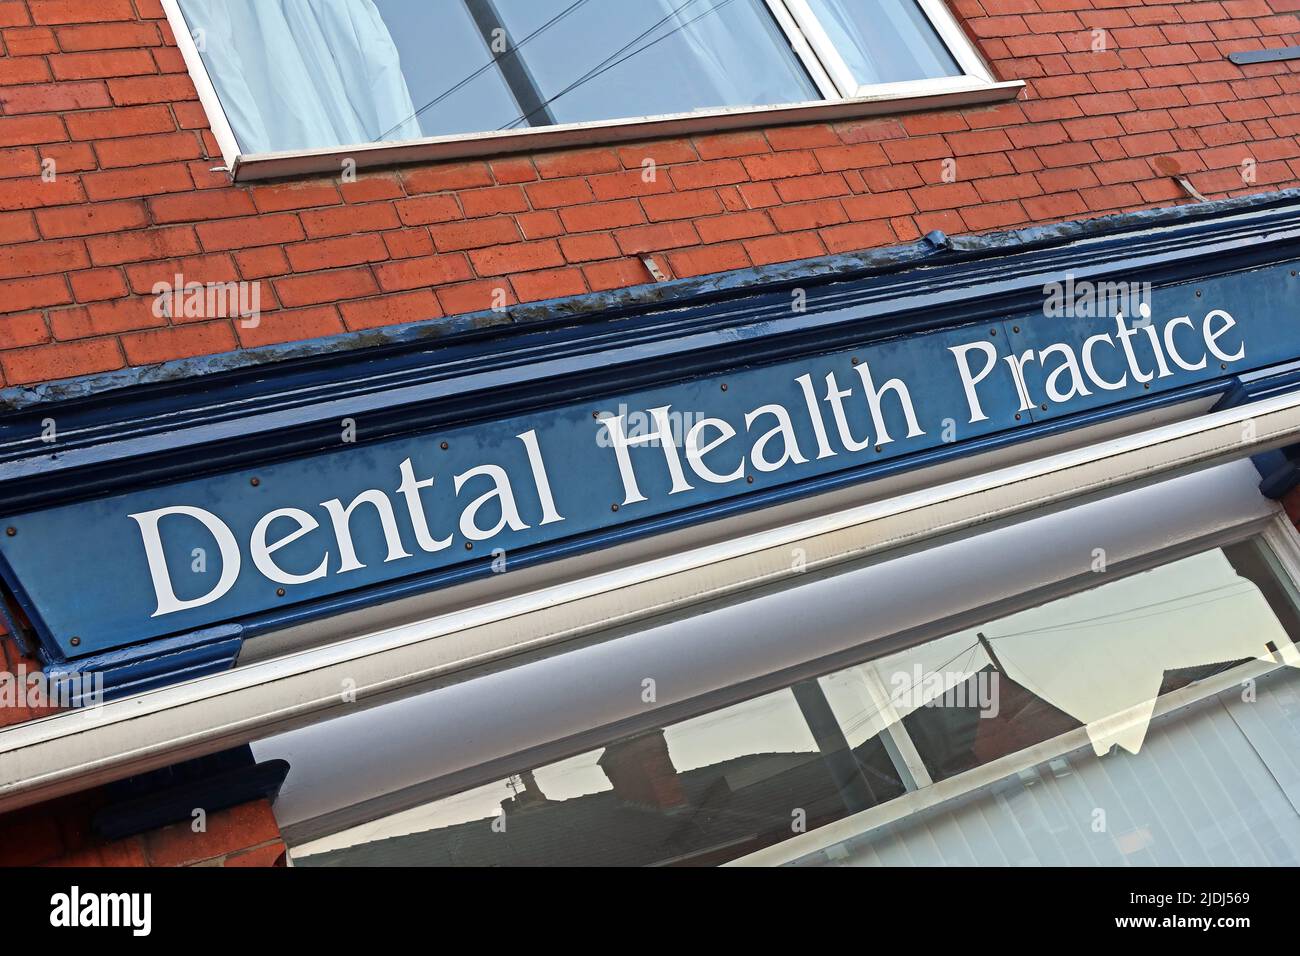 Dental Health Practice, private, NHS dentist Stock Photo